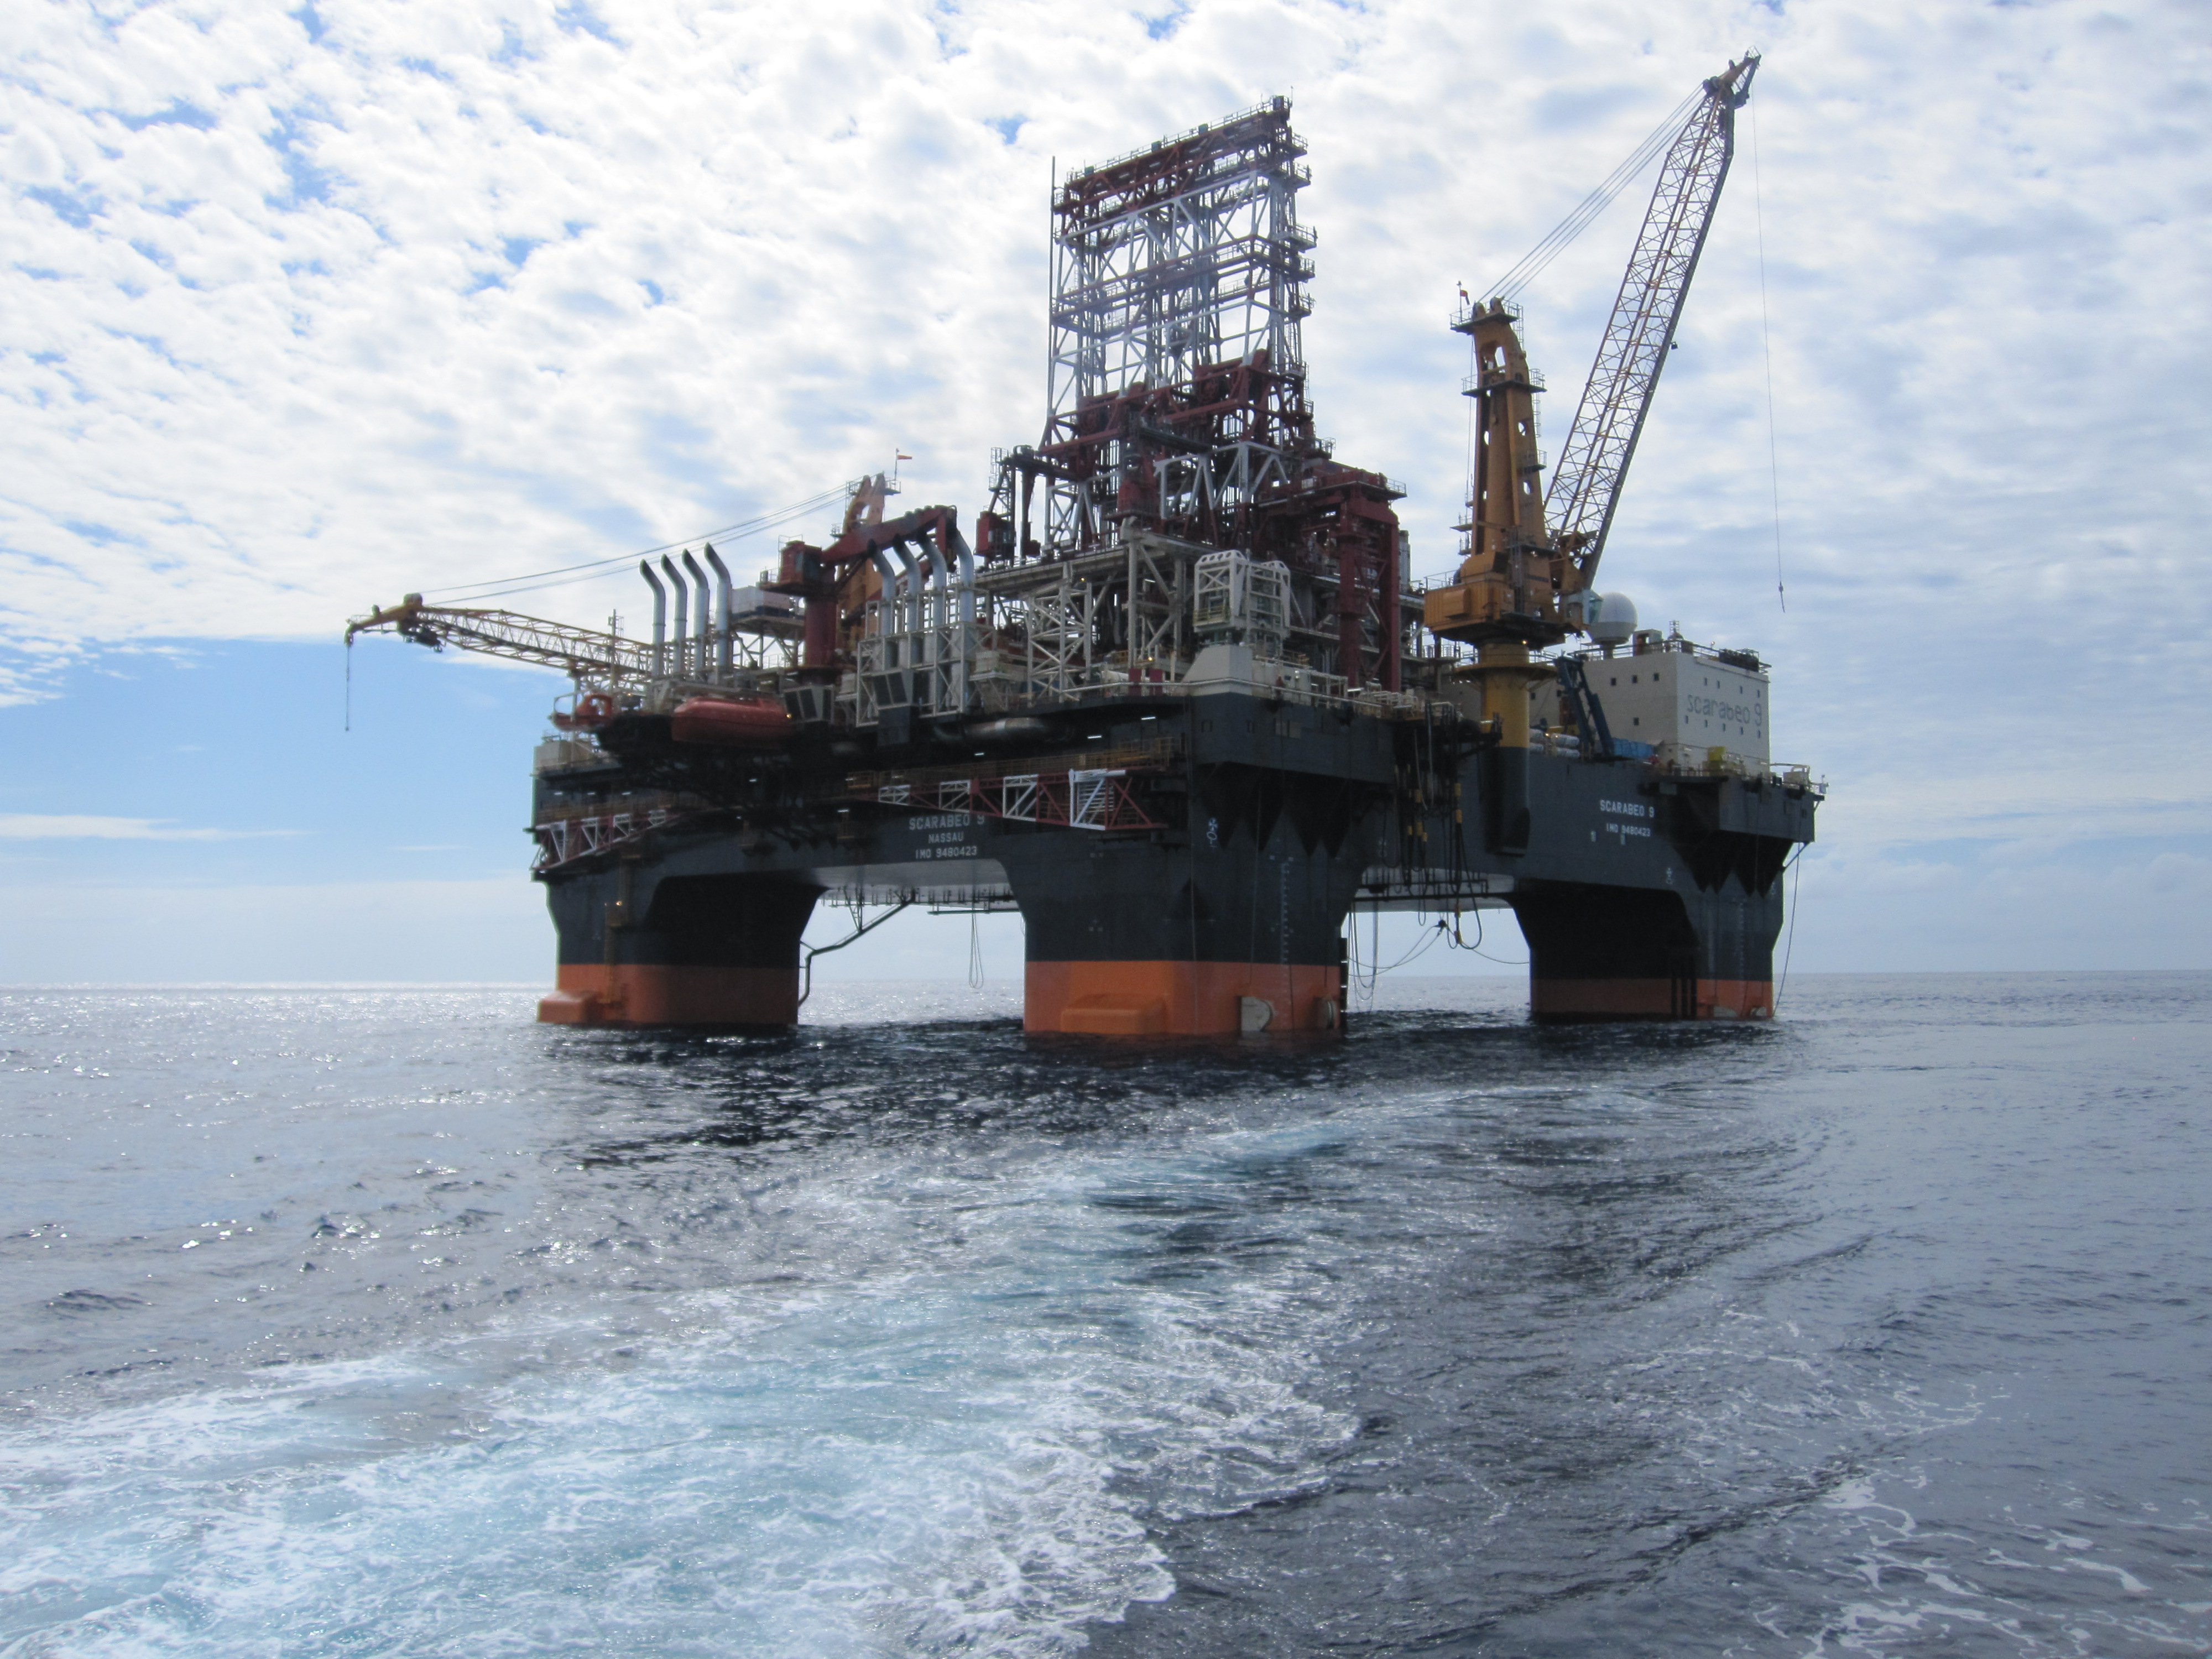 An oil drilling platform near Phuket, Thailand. Photograph: Vidar Lokken, 2011, WikiMedia Commons. Licensed under CC BY-SA 3.0.